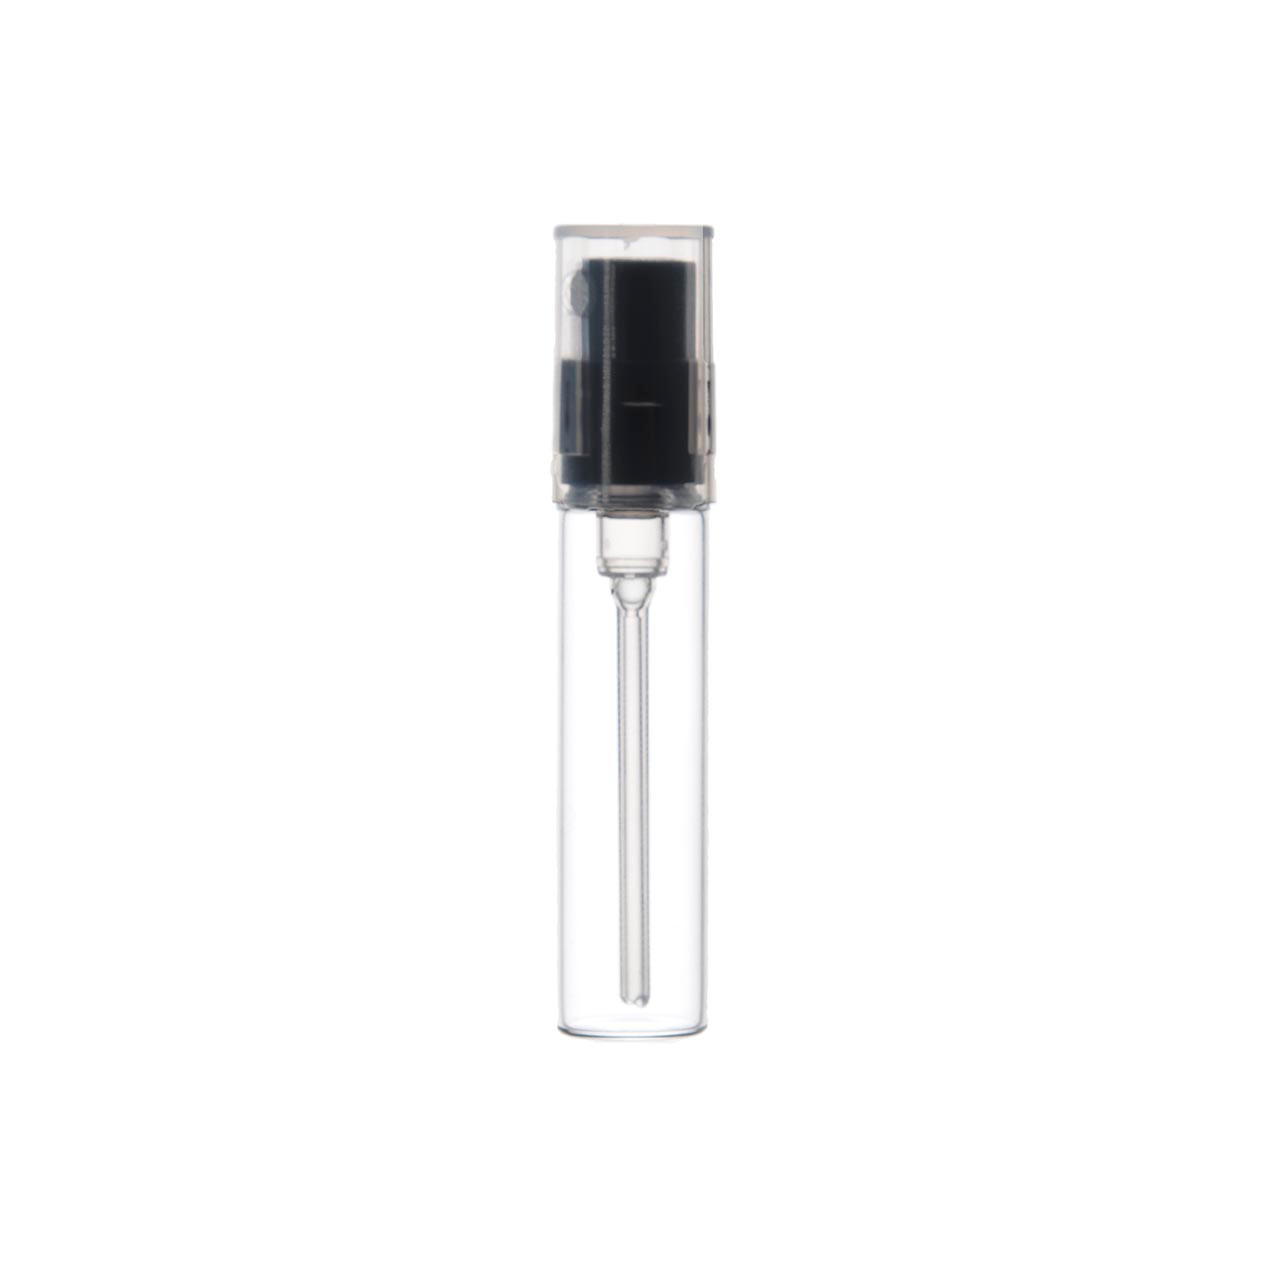 100 PCS 1/2/3 ML Empty Mini Glass Perfume Small Sample Vials